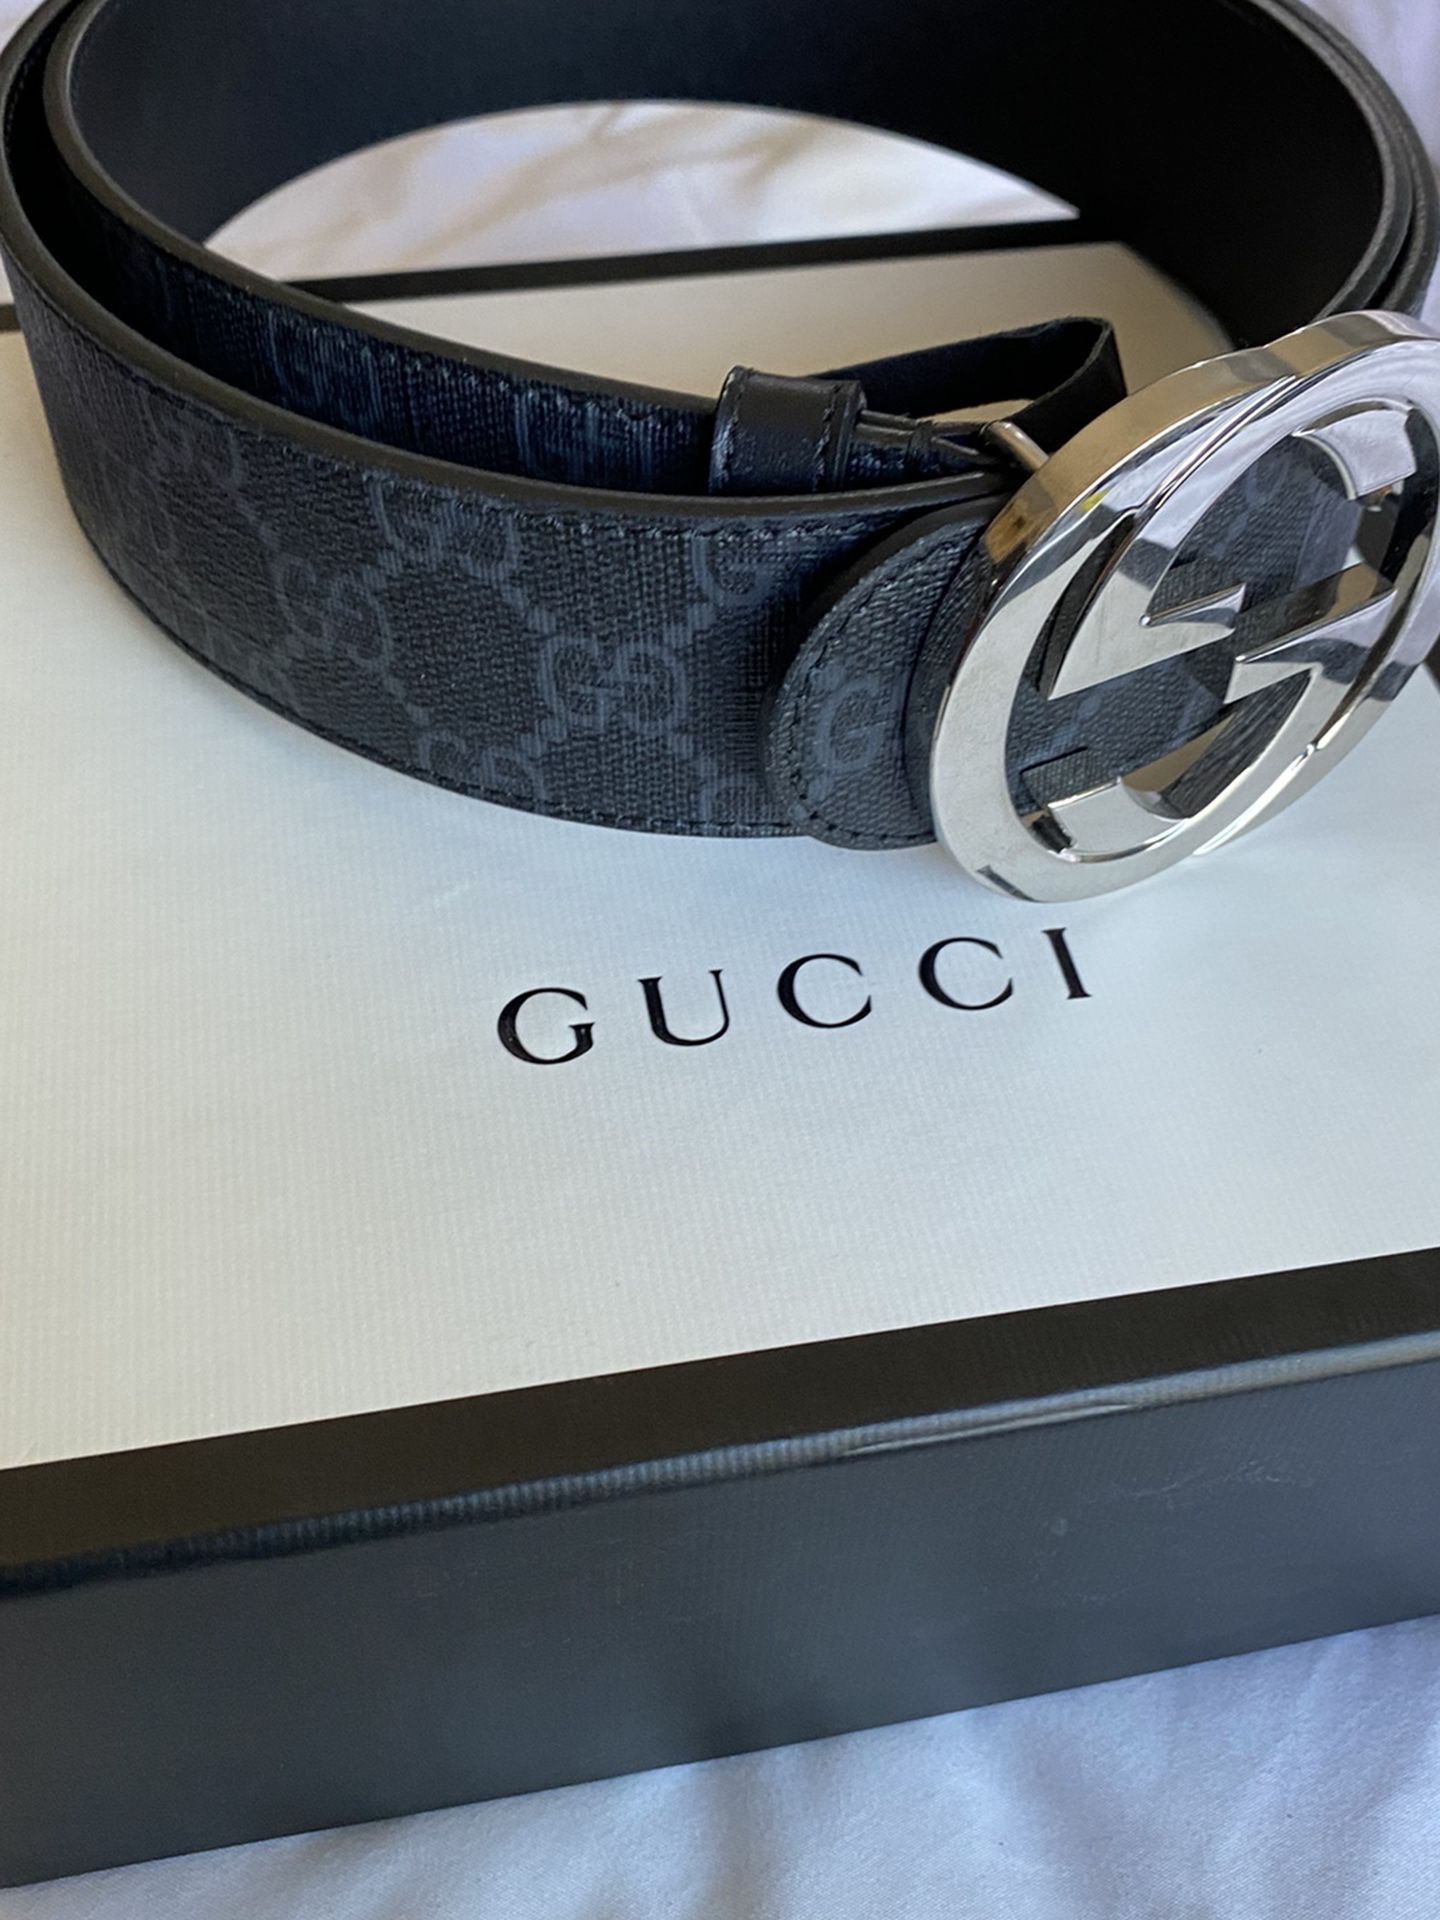 GG Buckle Gucci Belt